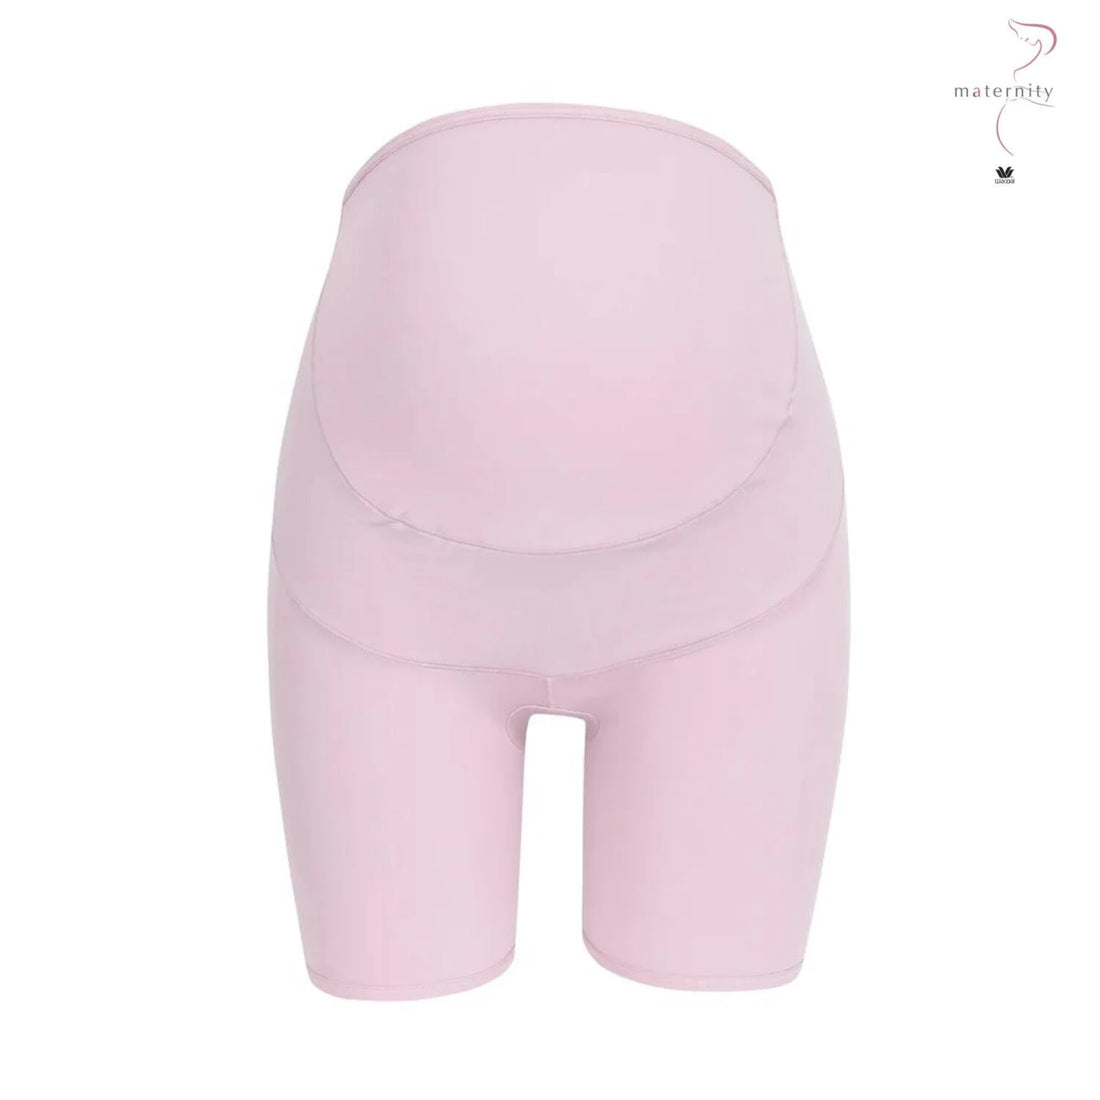 Wacoal Maternity Panty, full body pants, model WM6180, wild rose pink (WR)